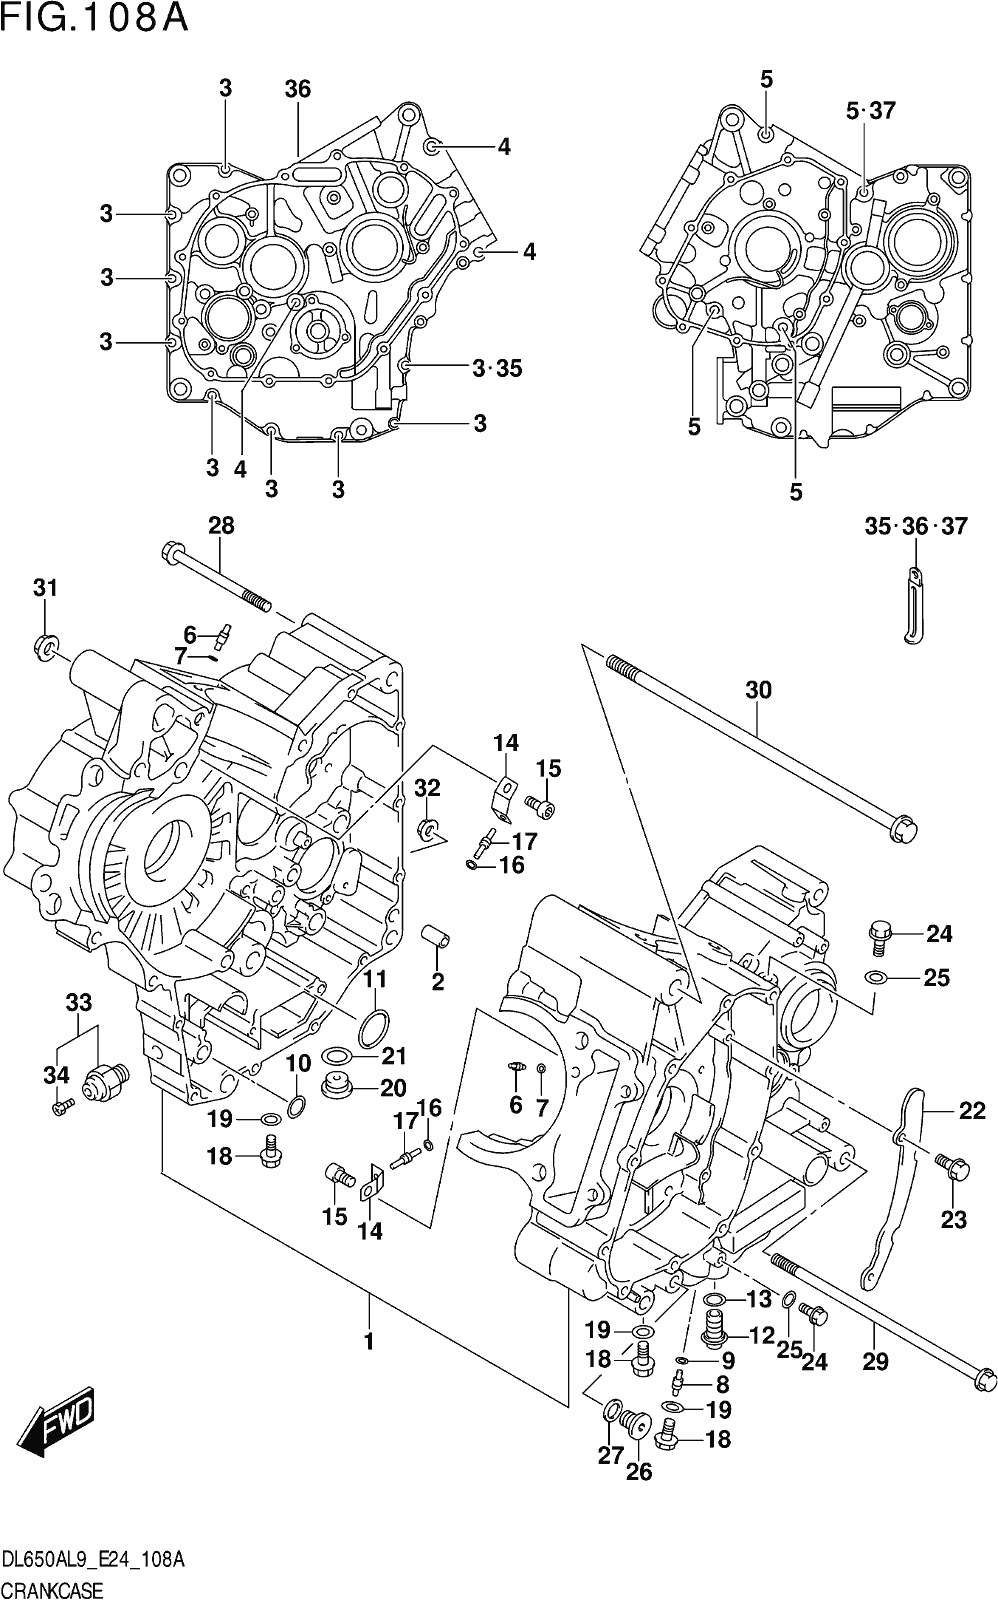 Fig.108a Crankcase